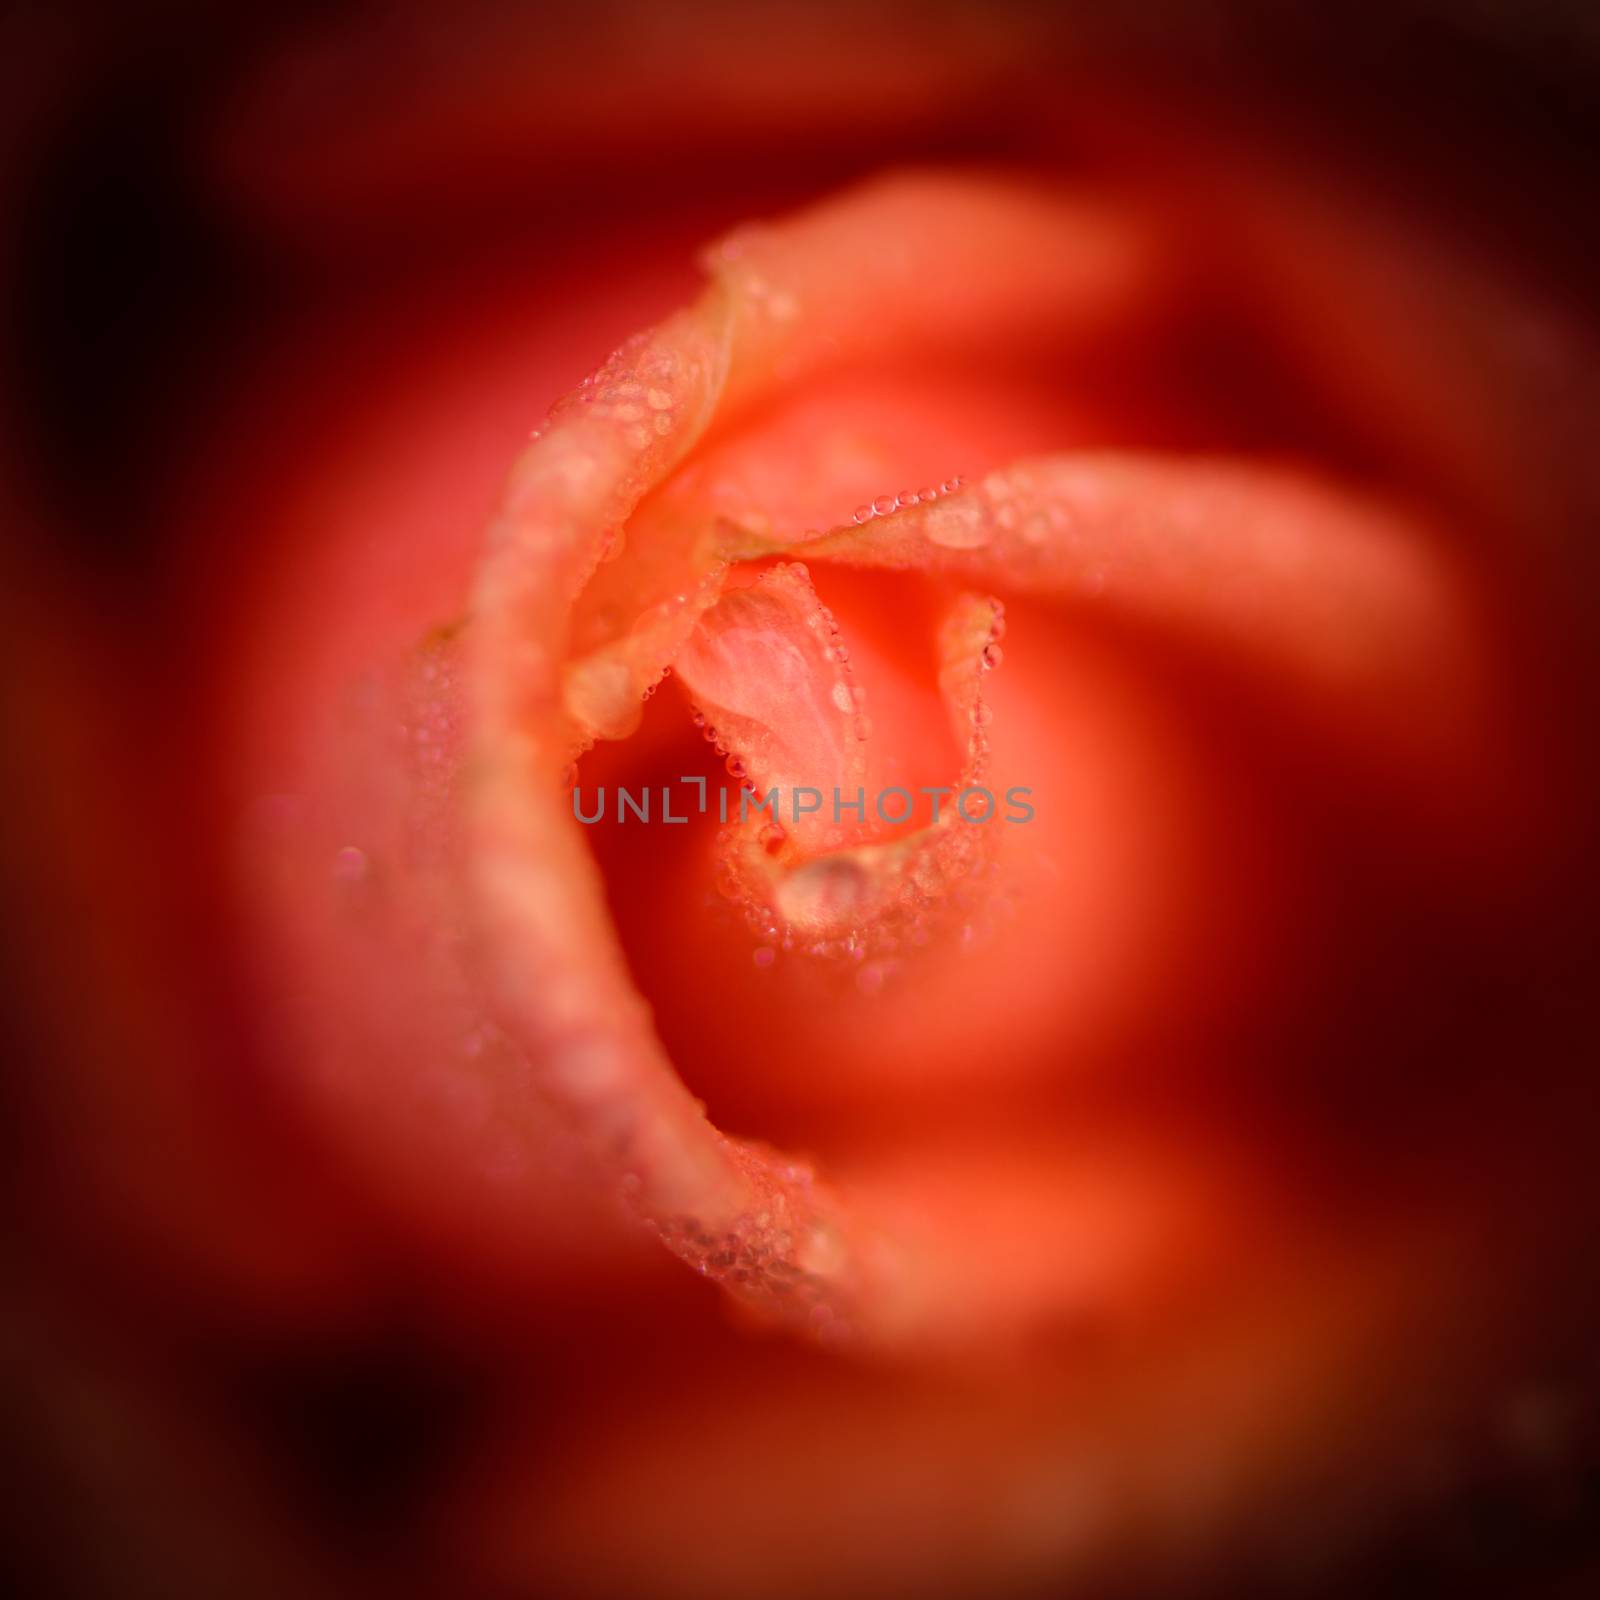 Fragile petals of red rose, soft focus